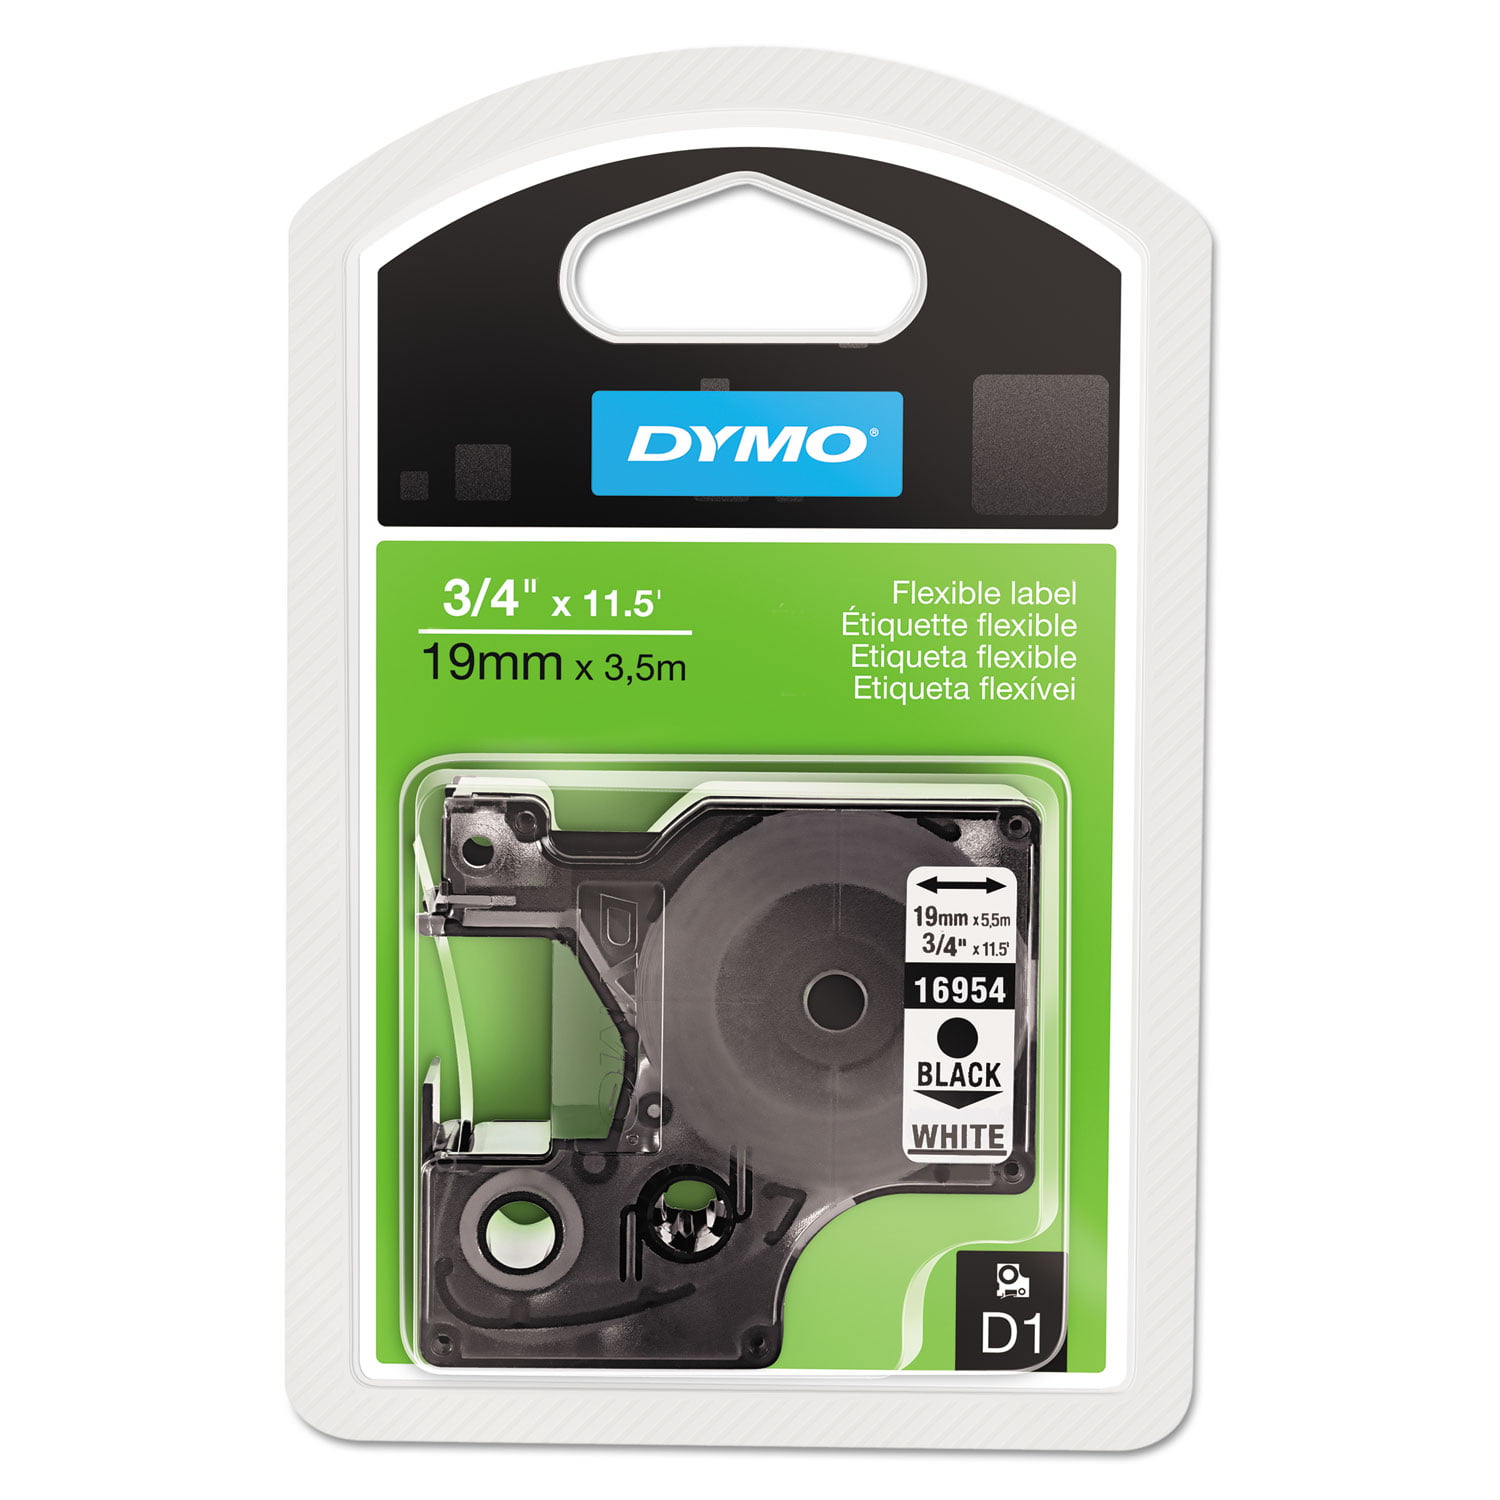 dymo-dym16954-nylon-fabric-tape-cartridge-1-each-white-walmart